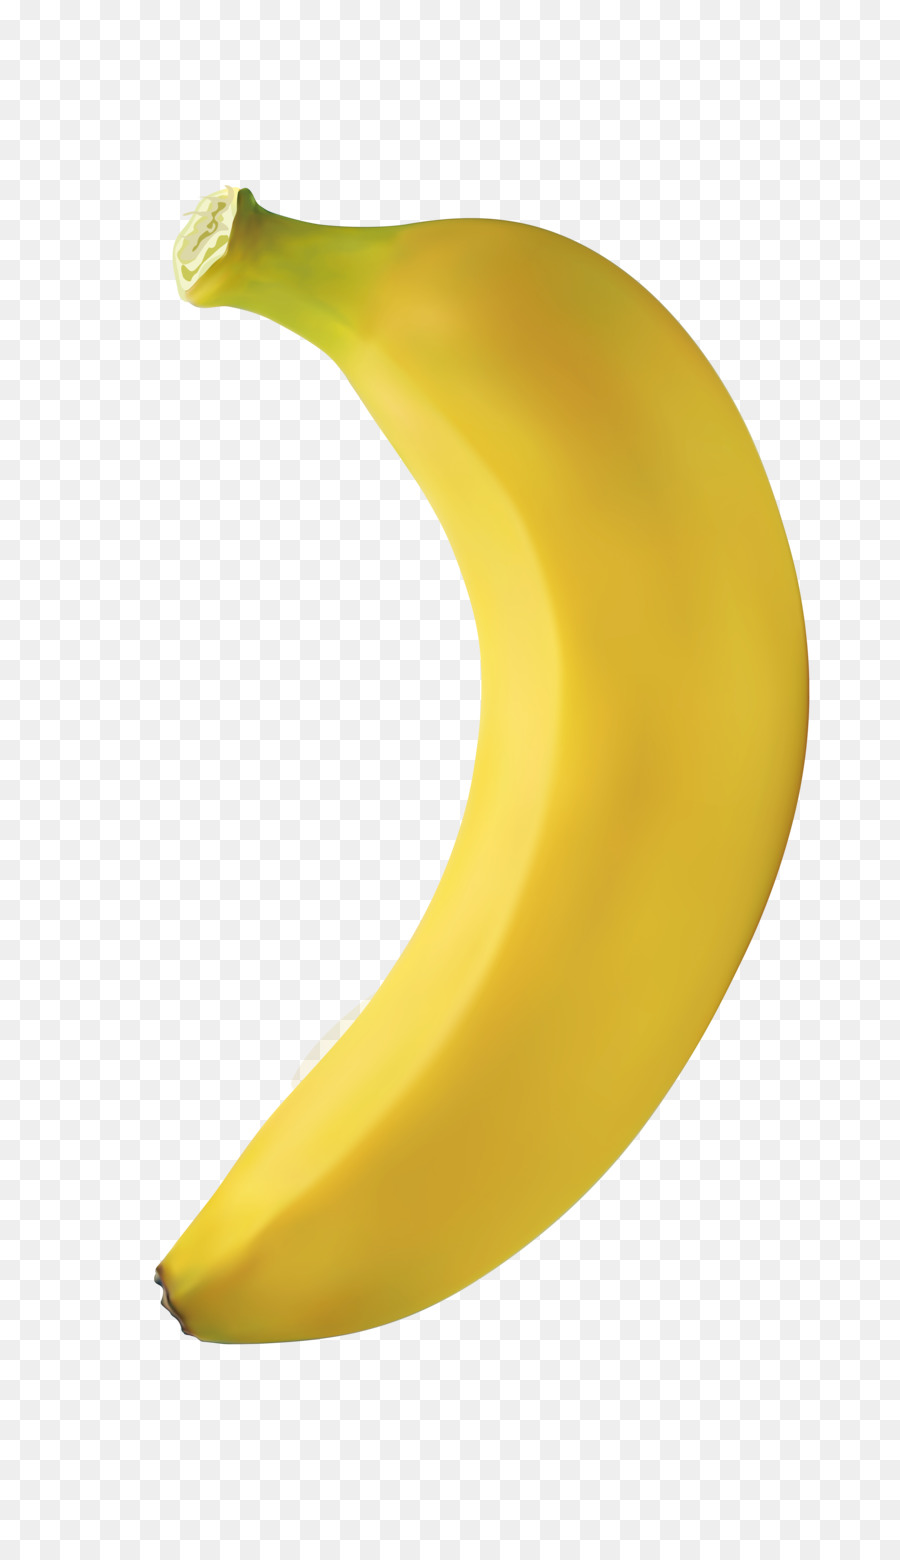 Banana Fruit Icon - banana png download - 4225*7296 - Free Transparent Fruit png Download.